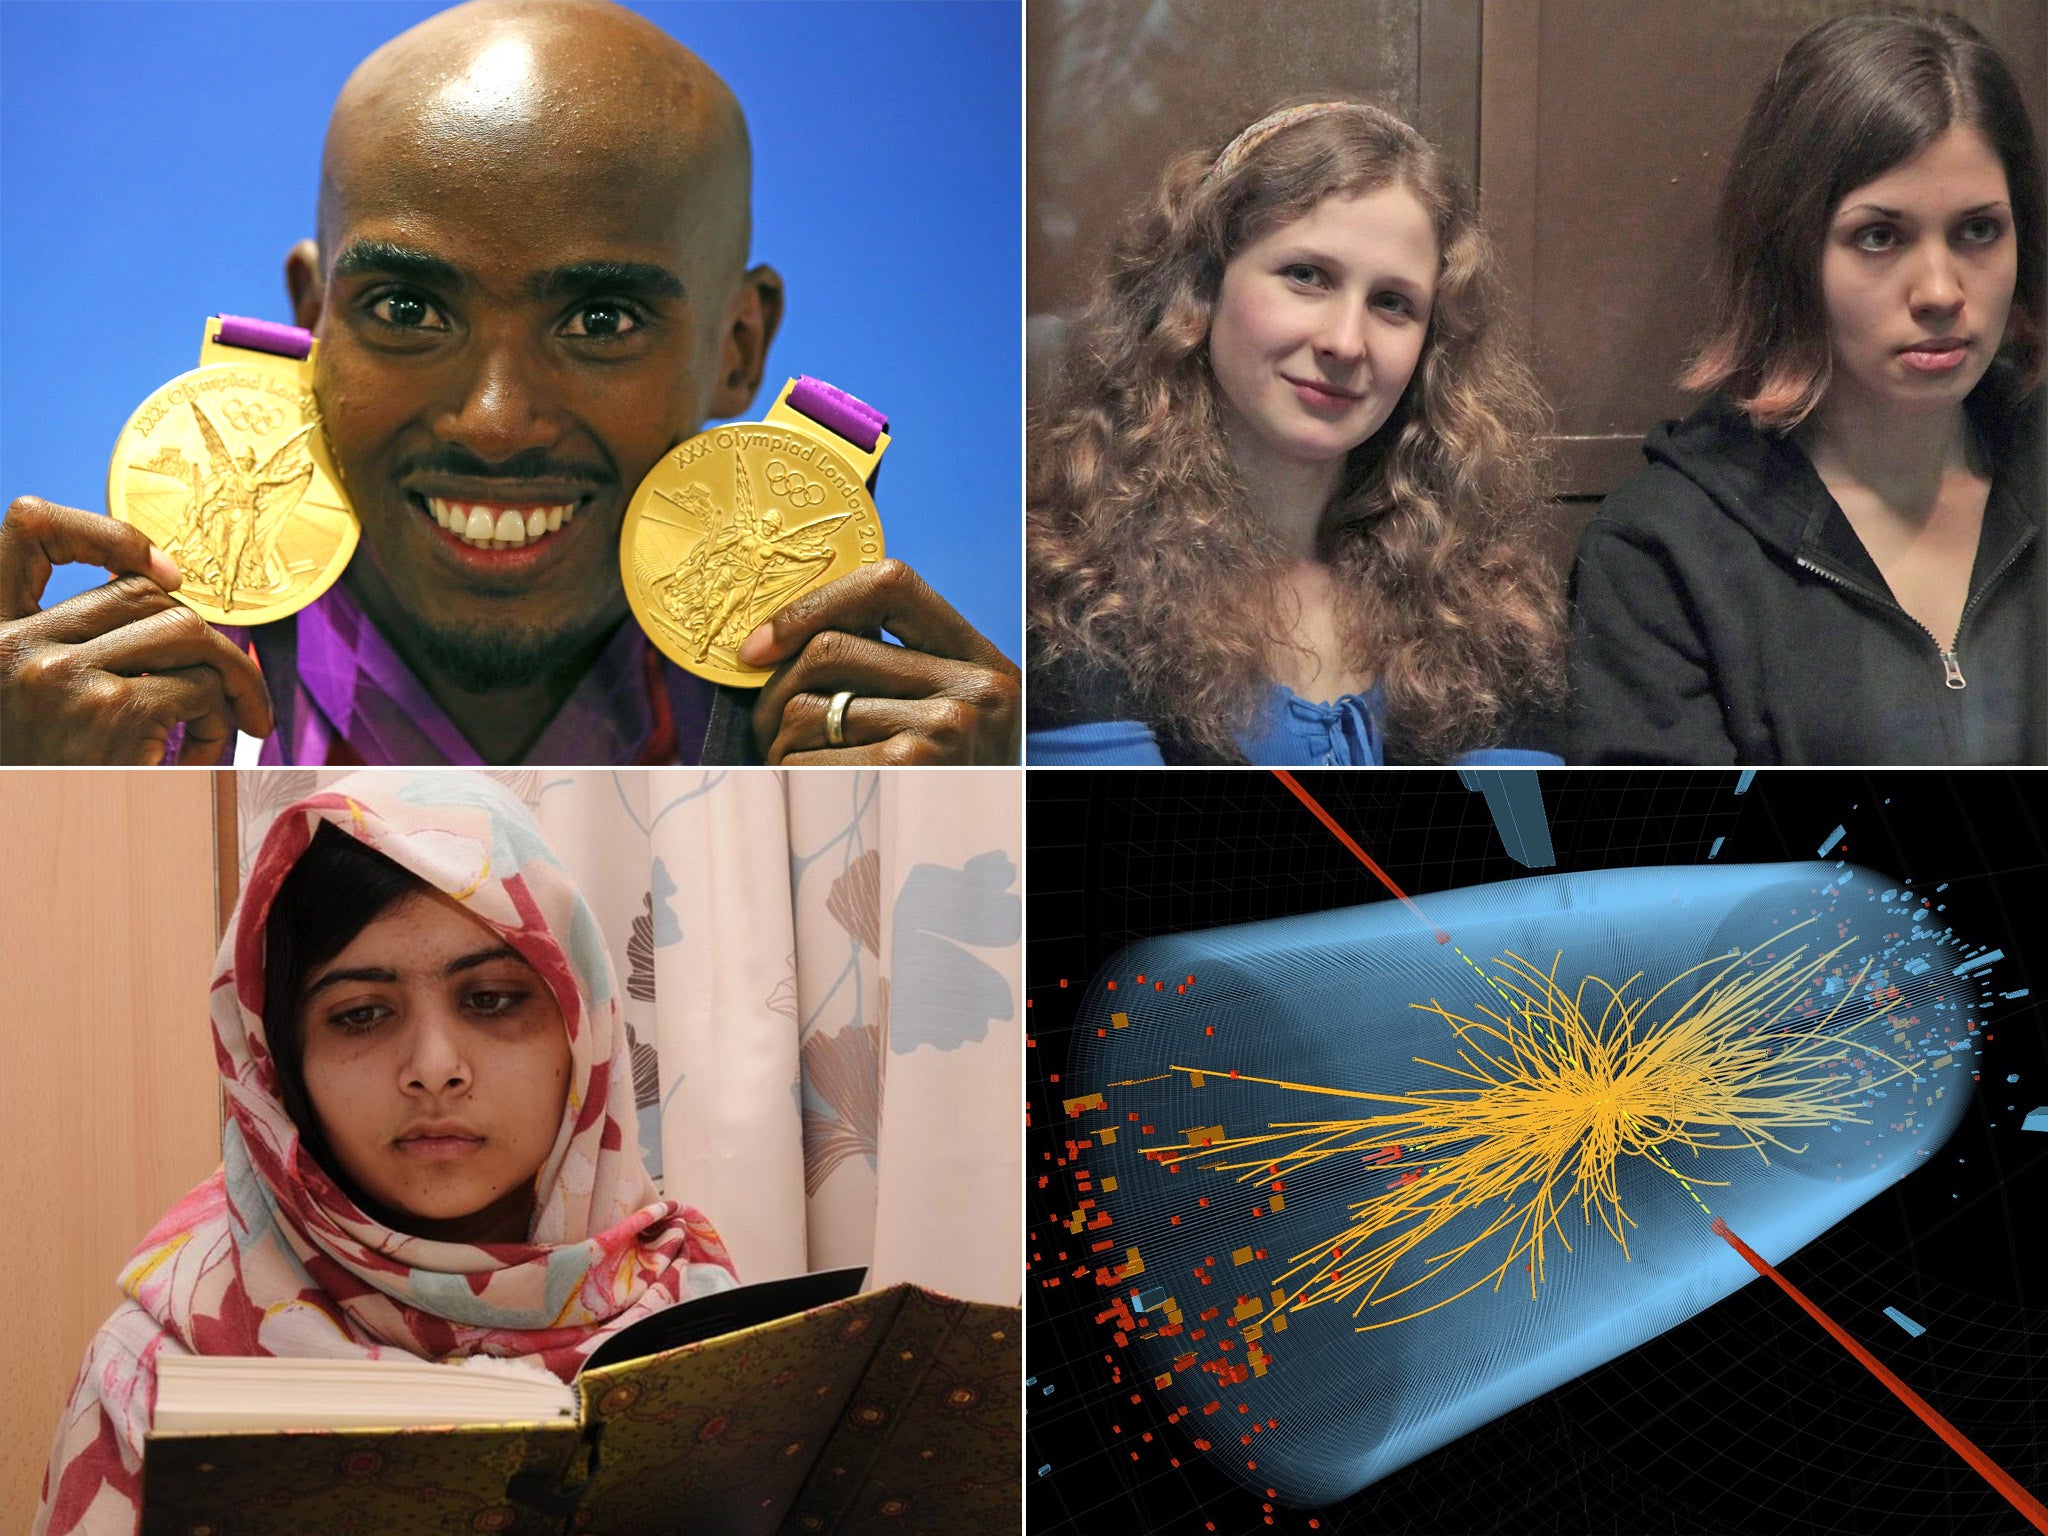 (Clockwise from top left): Mo Farah; Maria Alyokhina and Nadezhda Tolokonnikova of Pussy Riot; a representation of the Higgs boson particle; Malala Yousafzai